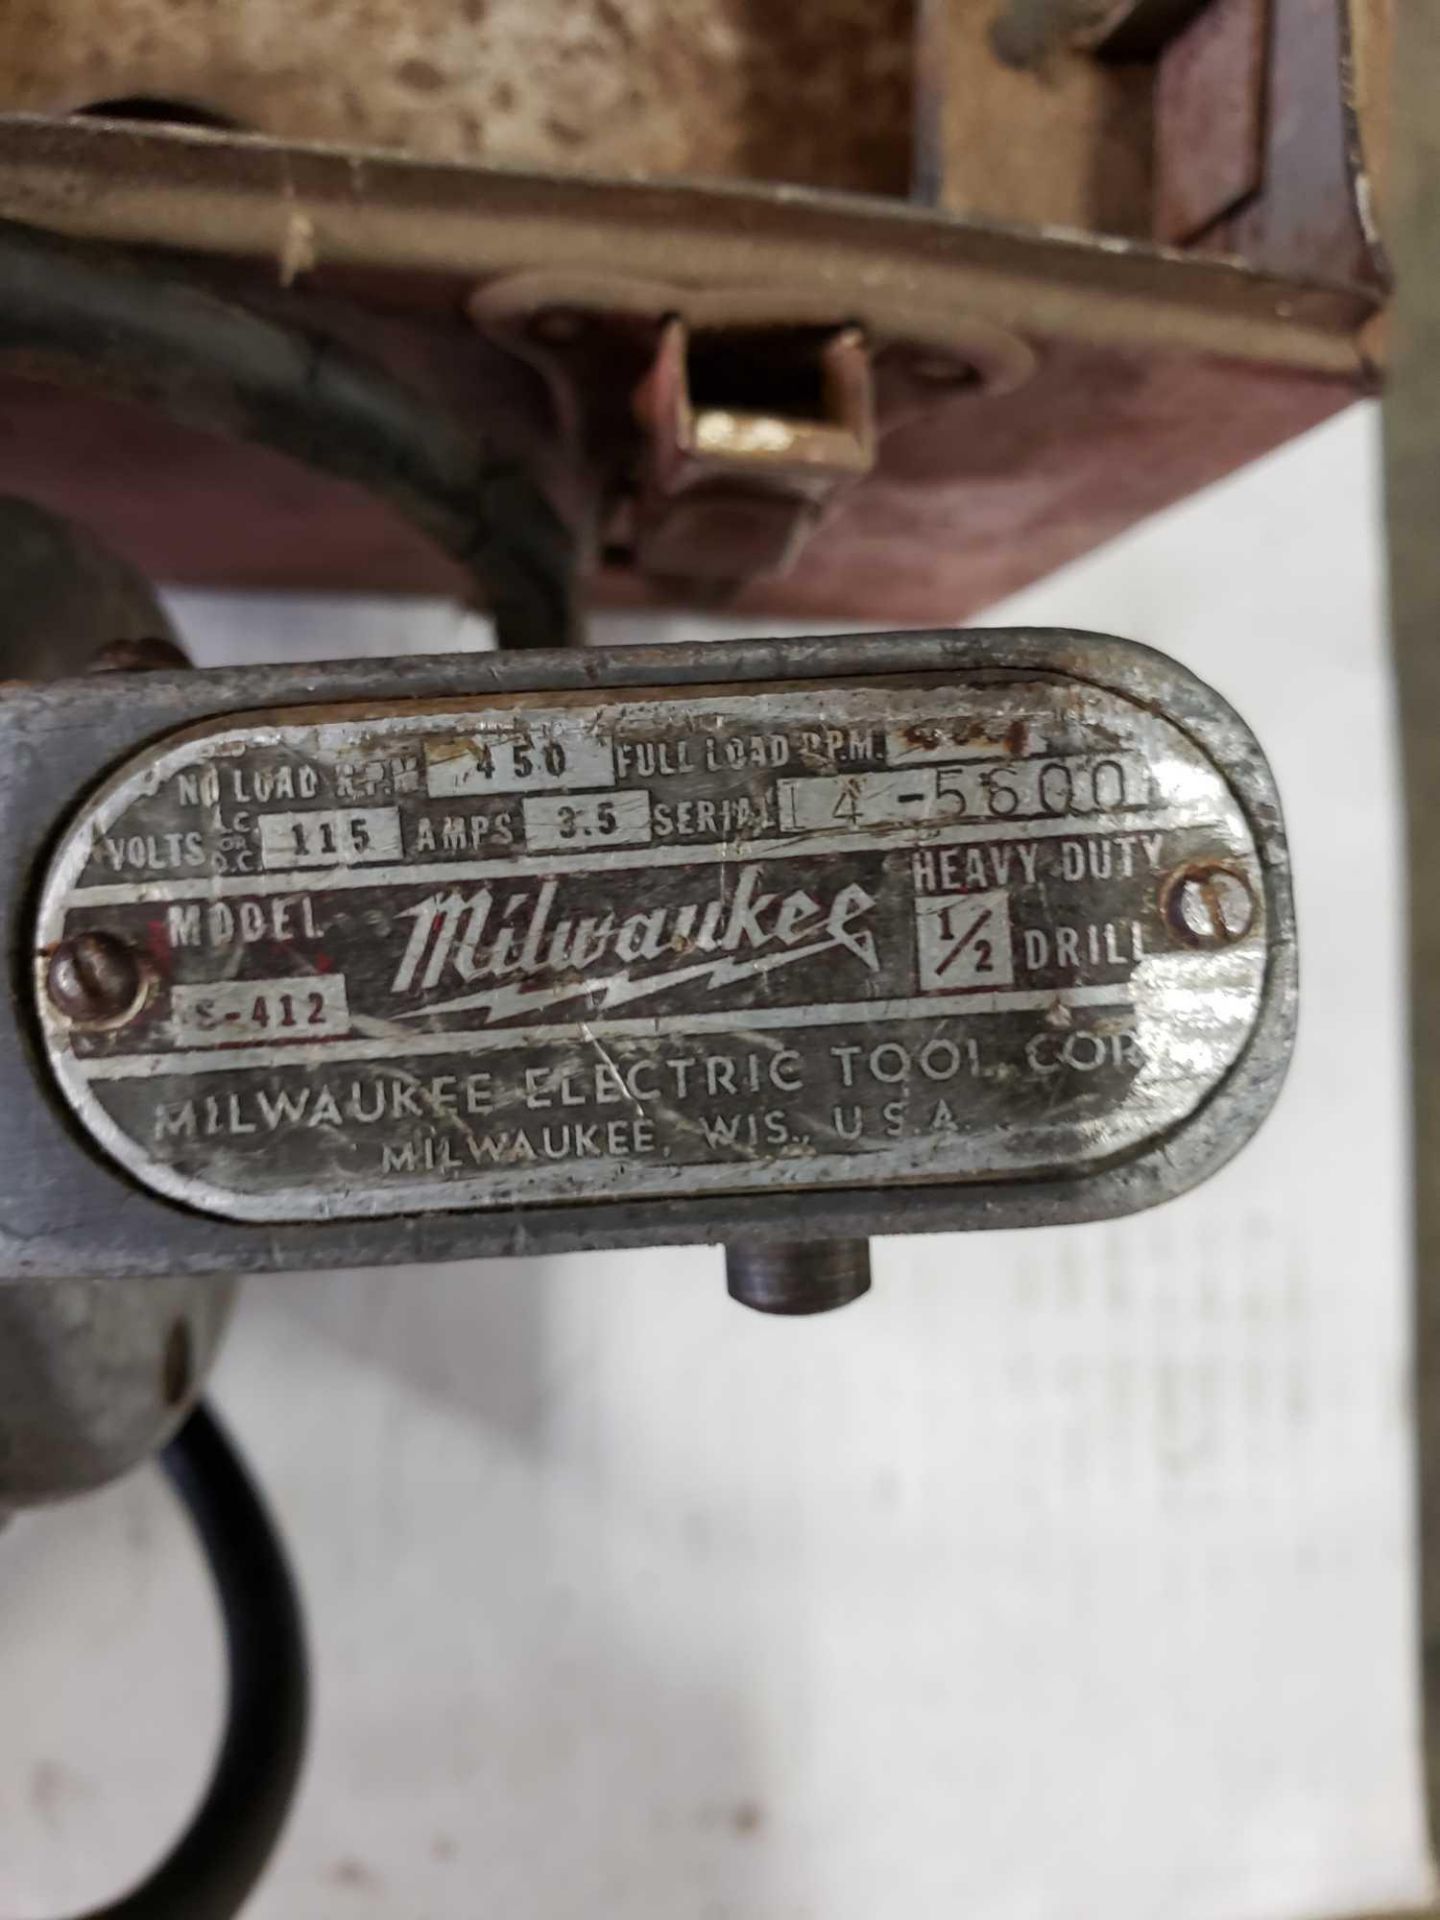 Milwaukee model S-412 right angle drill 1/2" chuck, single phase 110v. - Image 2 of 3